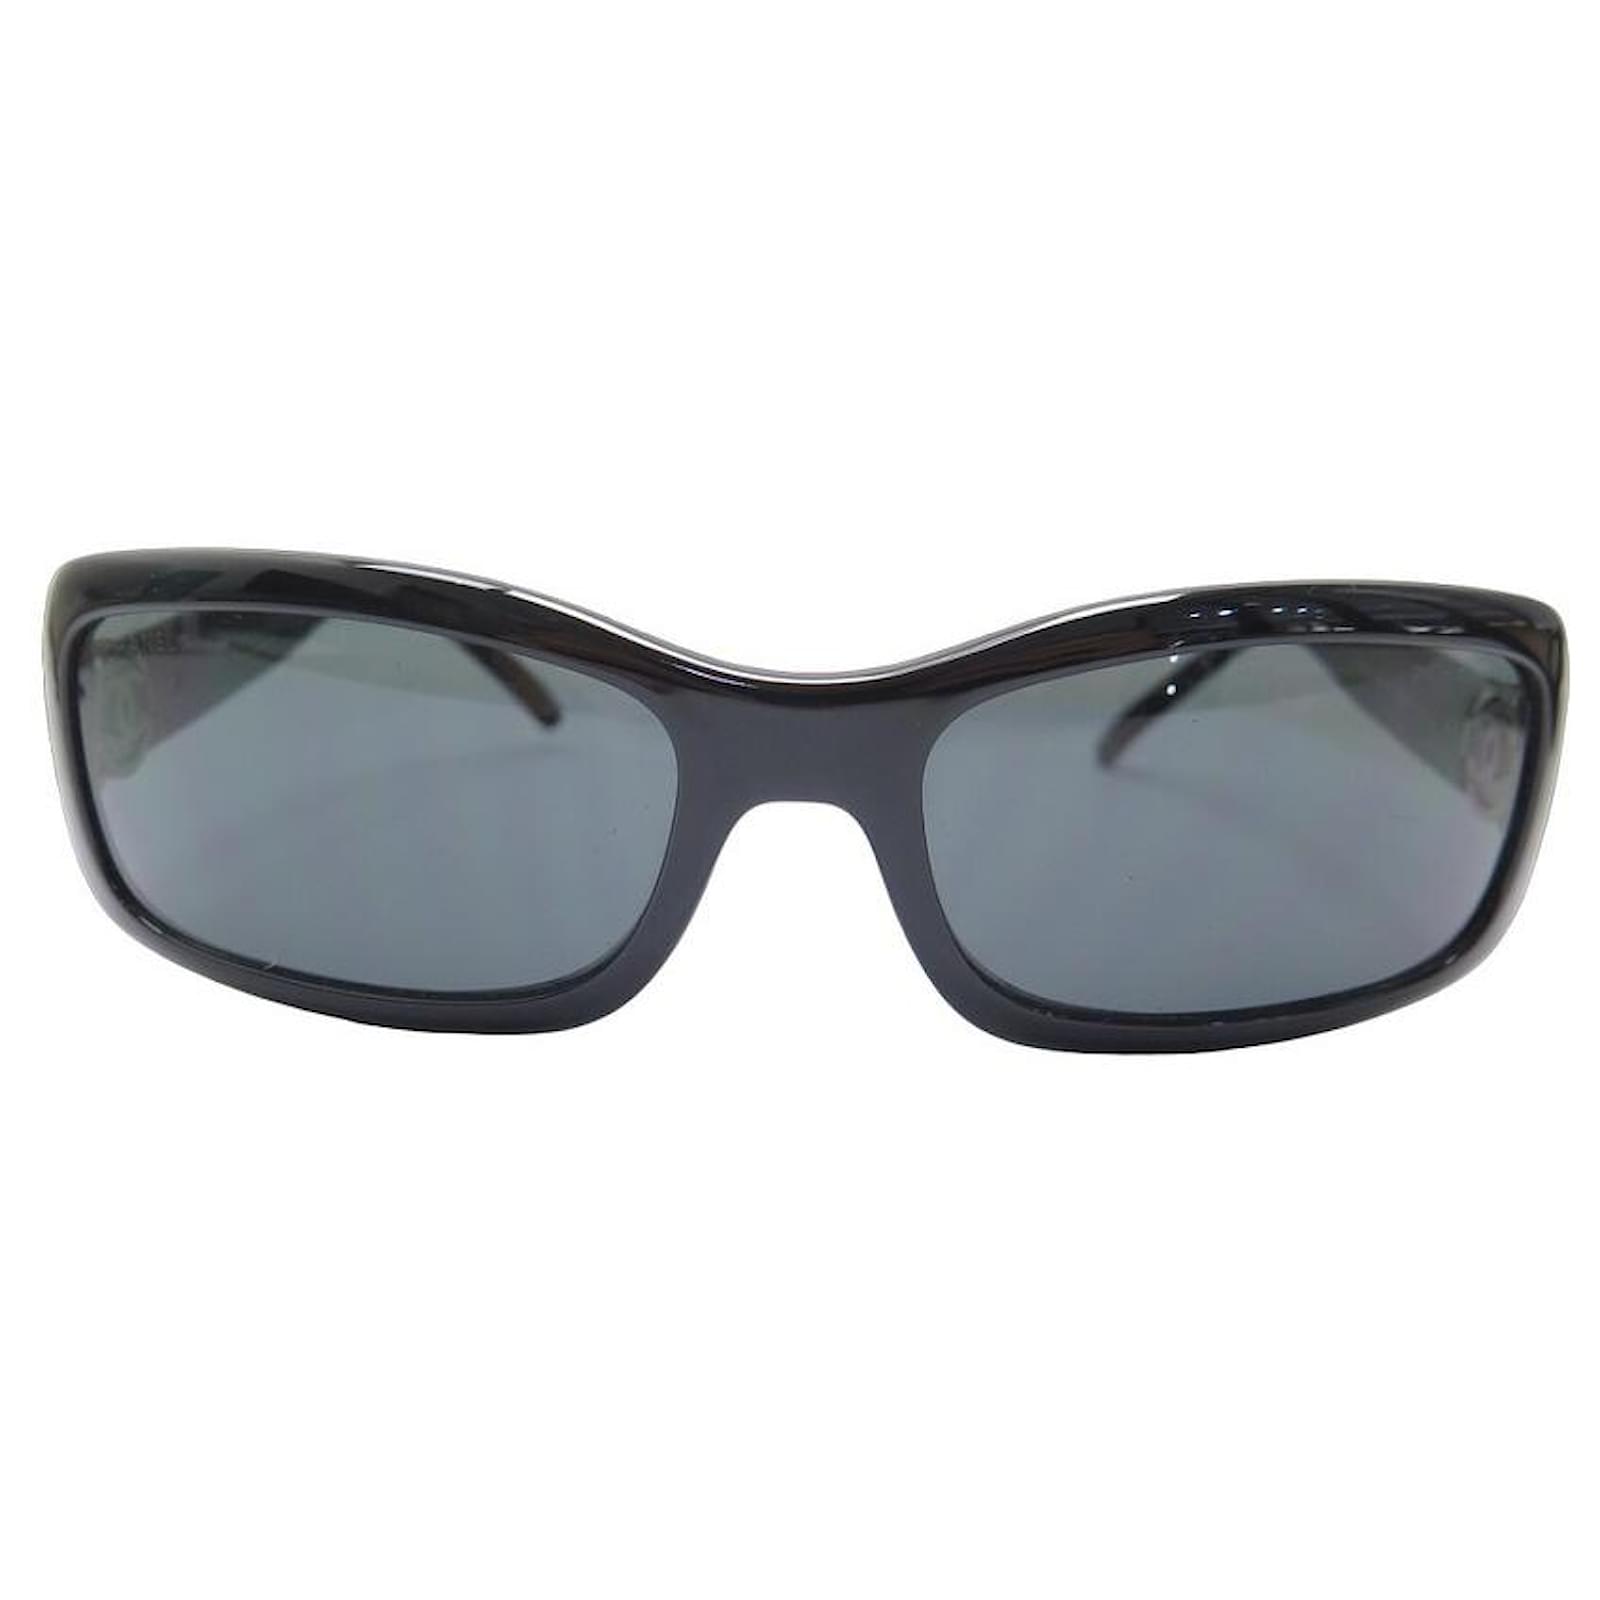 Chanel sunglasses 6024 BLACK PLASTIC CC LOGO BLACK SUNGLASSES